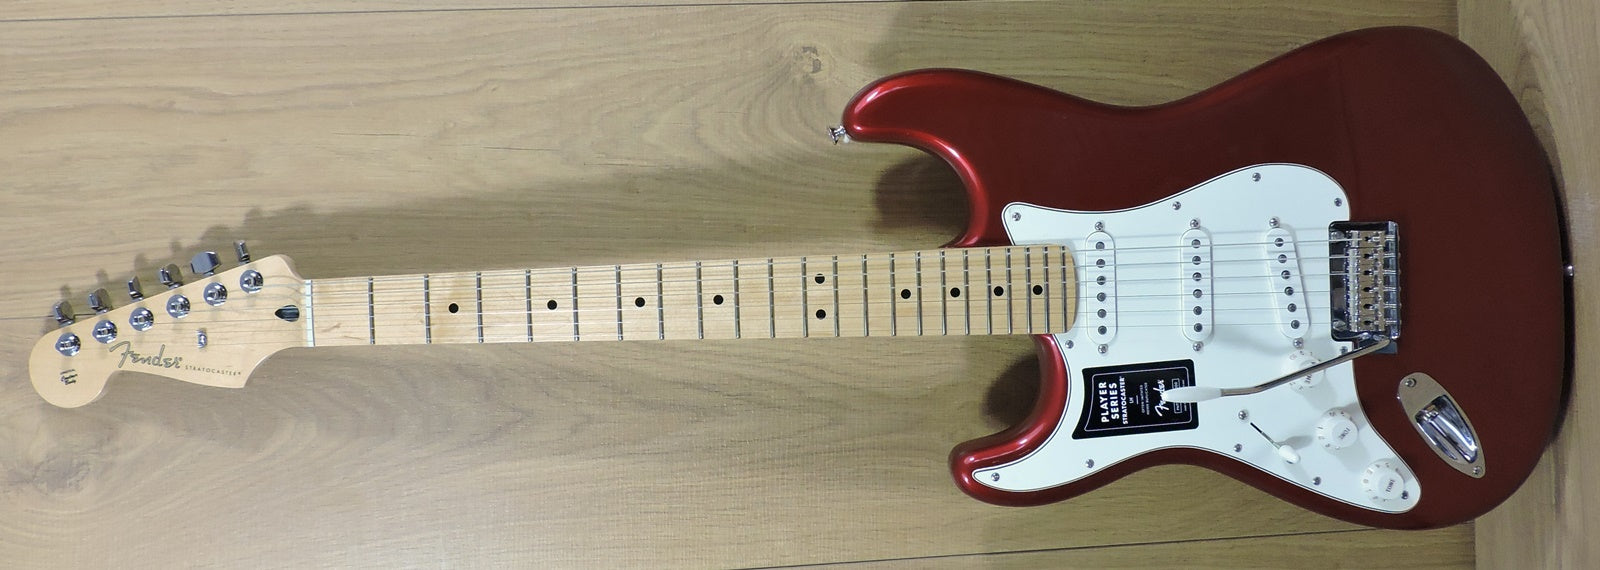 Fender Player Stratocaster Left-Handed Candy Apple Red